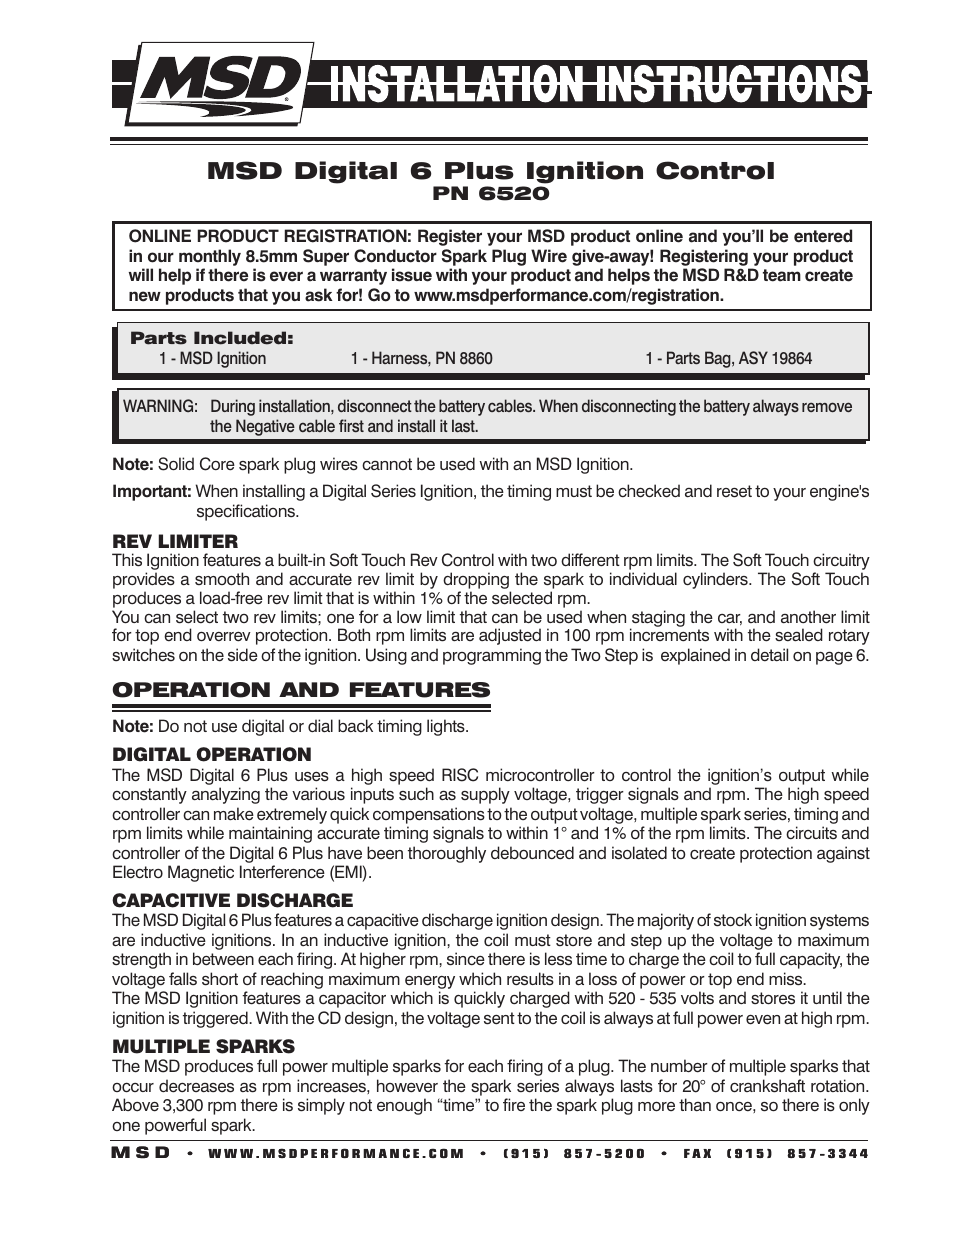 Msd Digital 6 Plus Wiring Diagram